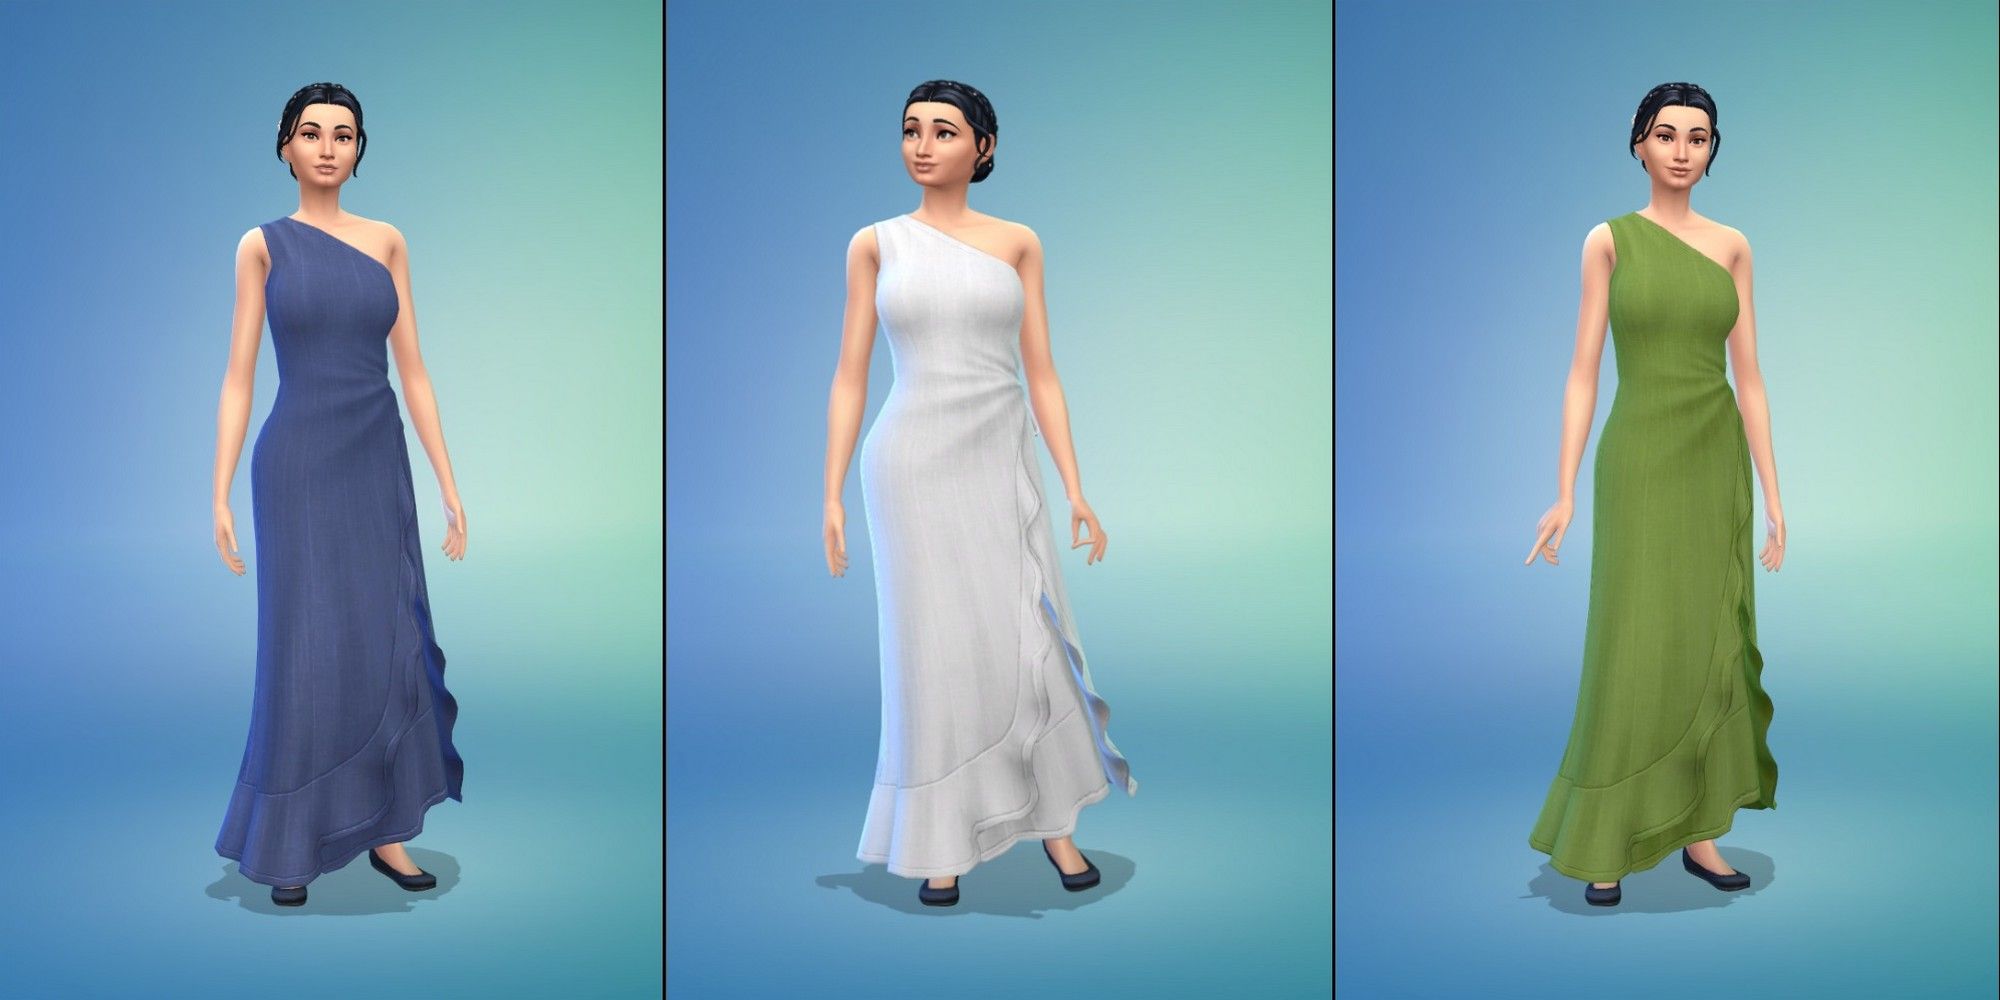 Sims 4 Wedding Dress Scalloped Edge Colors